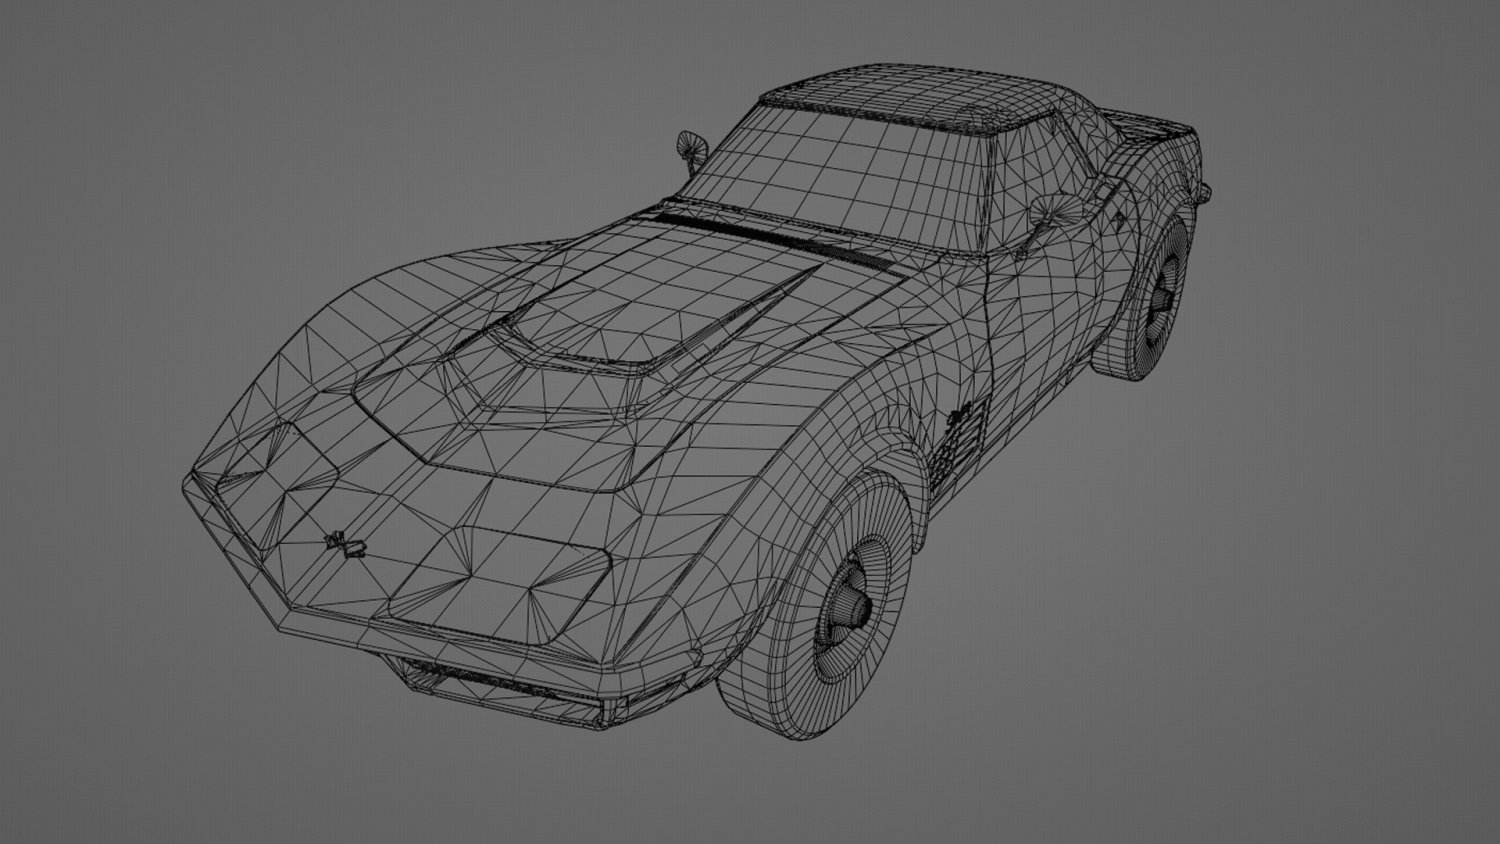 Chevrolet Corvette ZR-1 C3 Grátis Modelo 3D in Carros antigos 3DExport